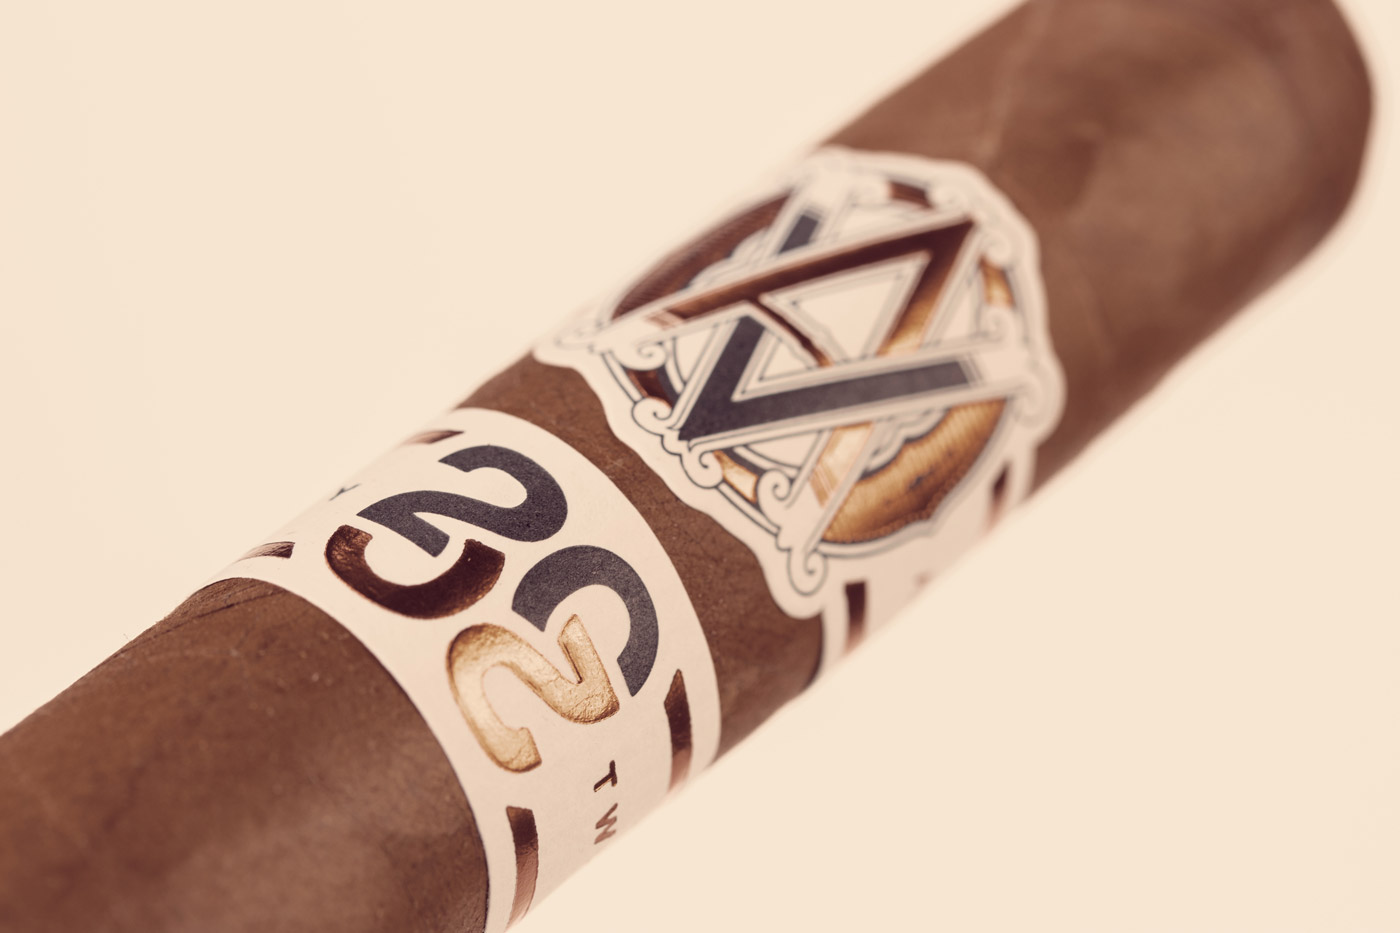 AVO Improvisation Series LE20 cigar review